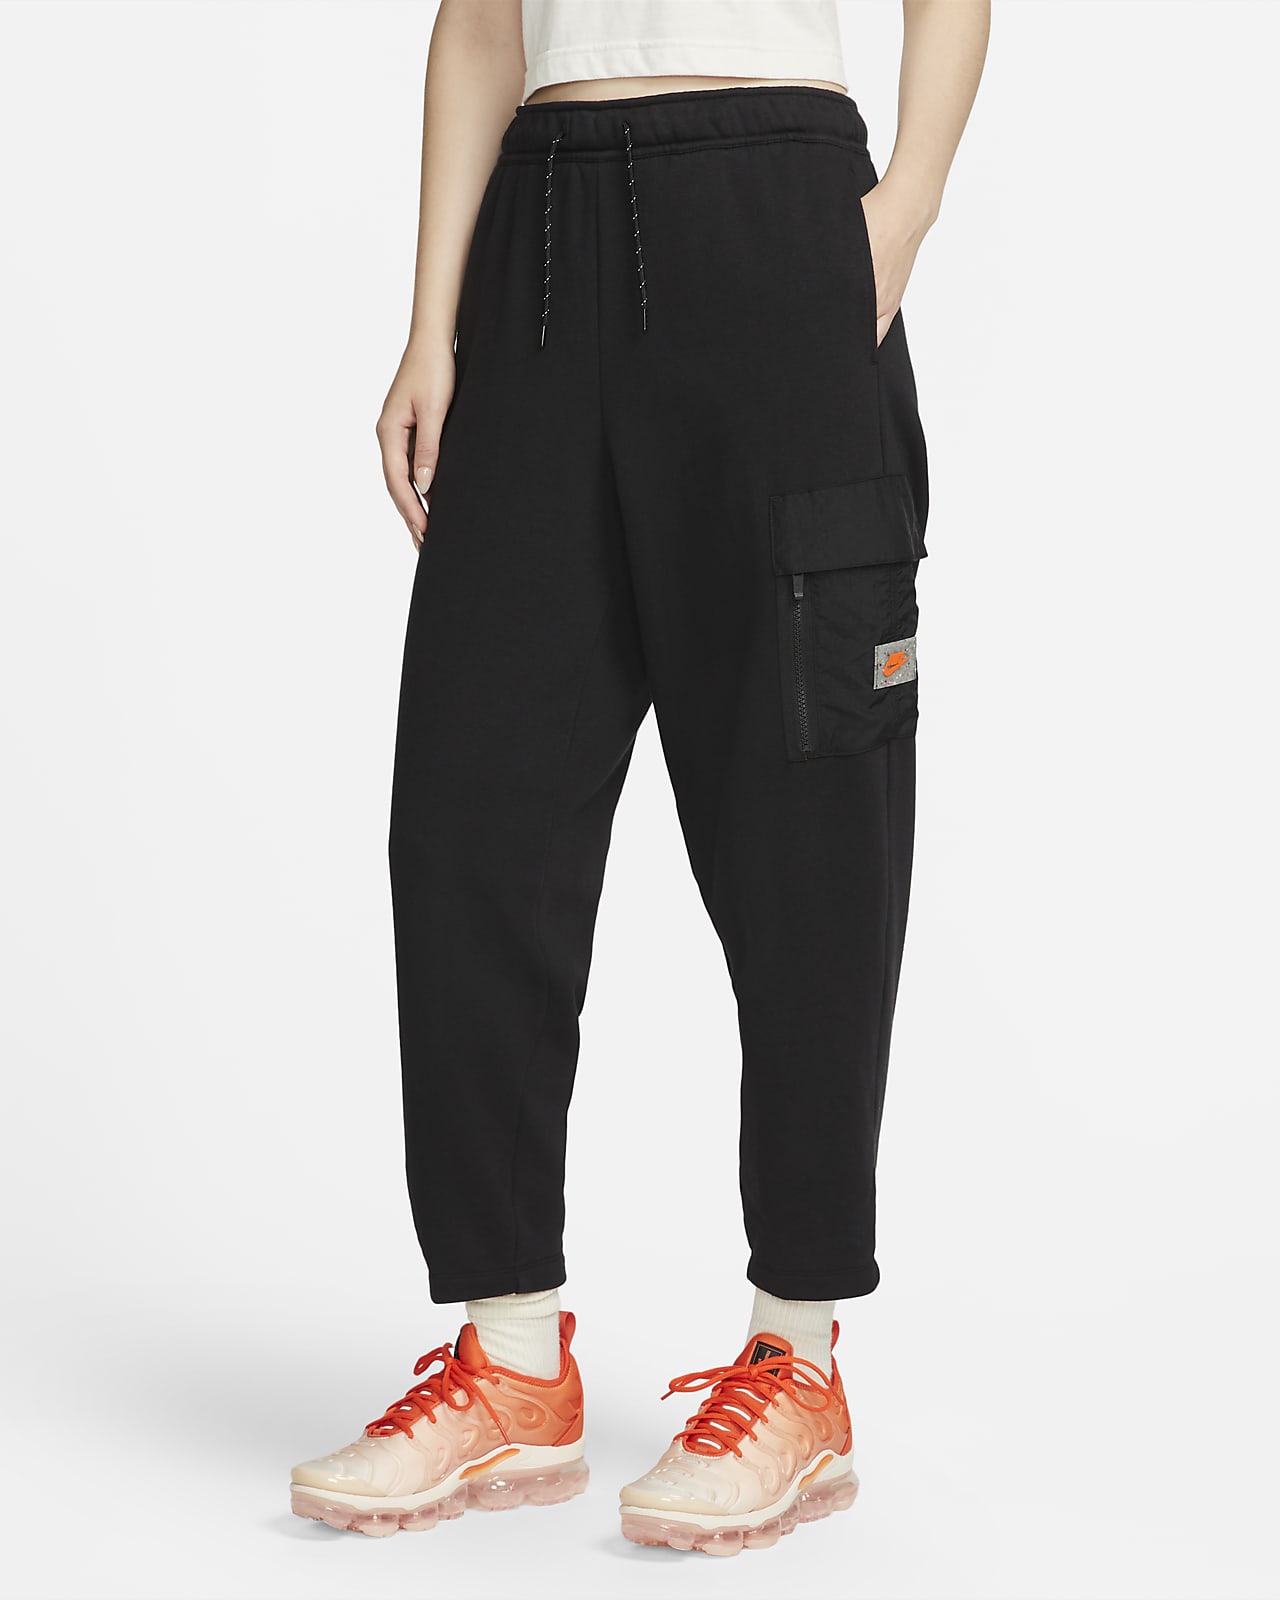 Nike Sportswear-sports-utility-cargobukser i fleece til kvinder